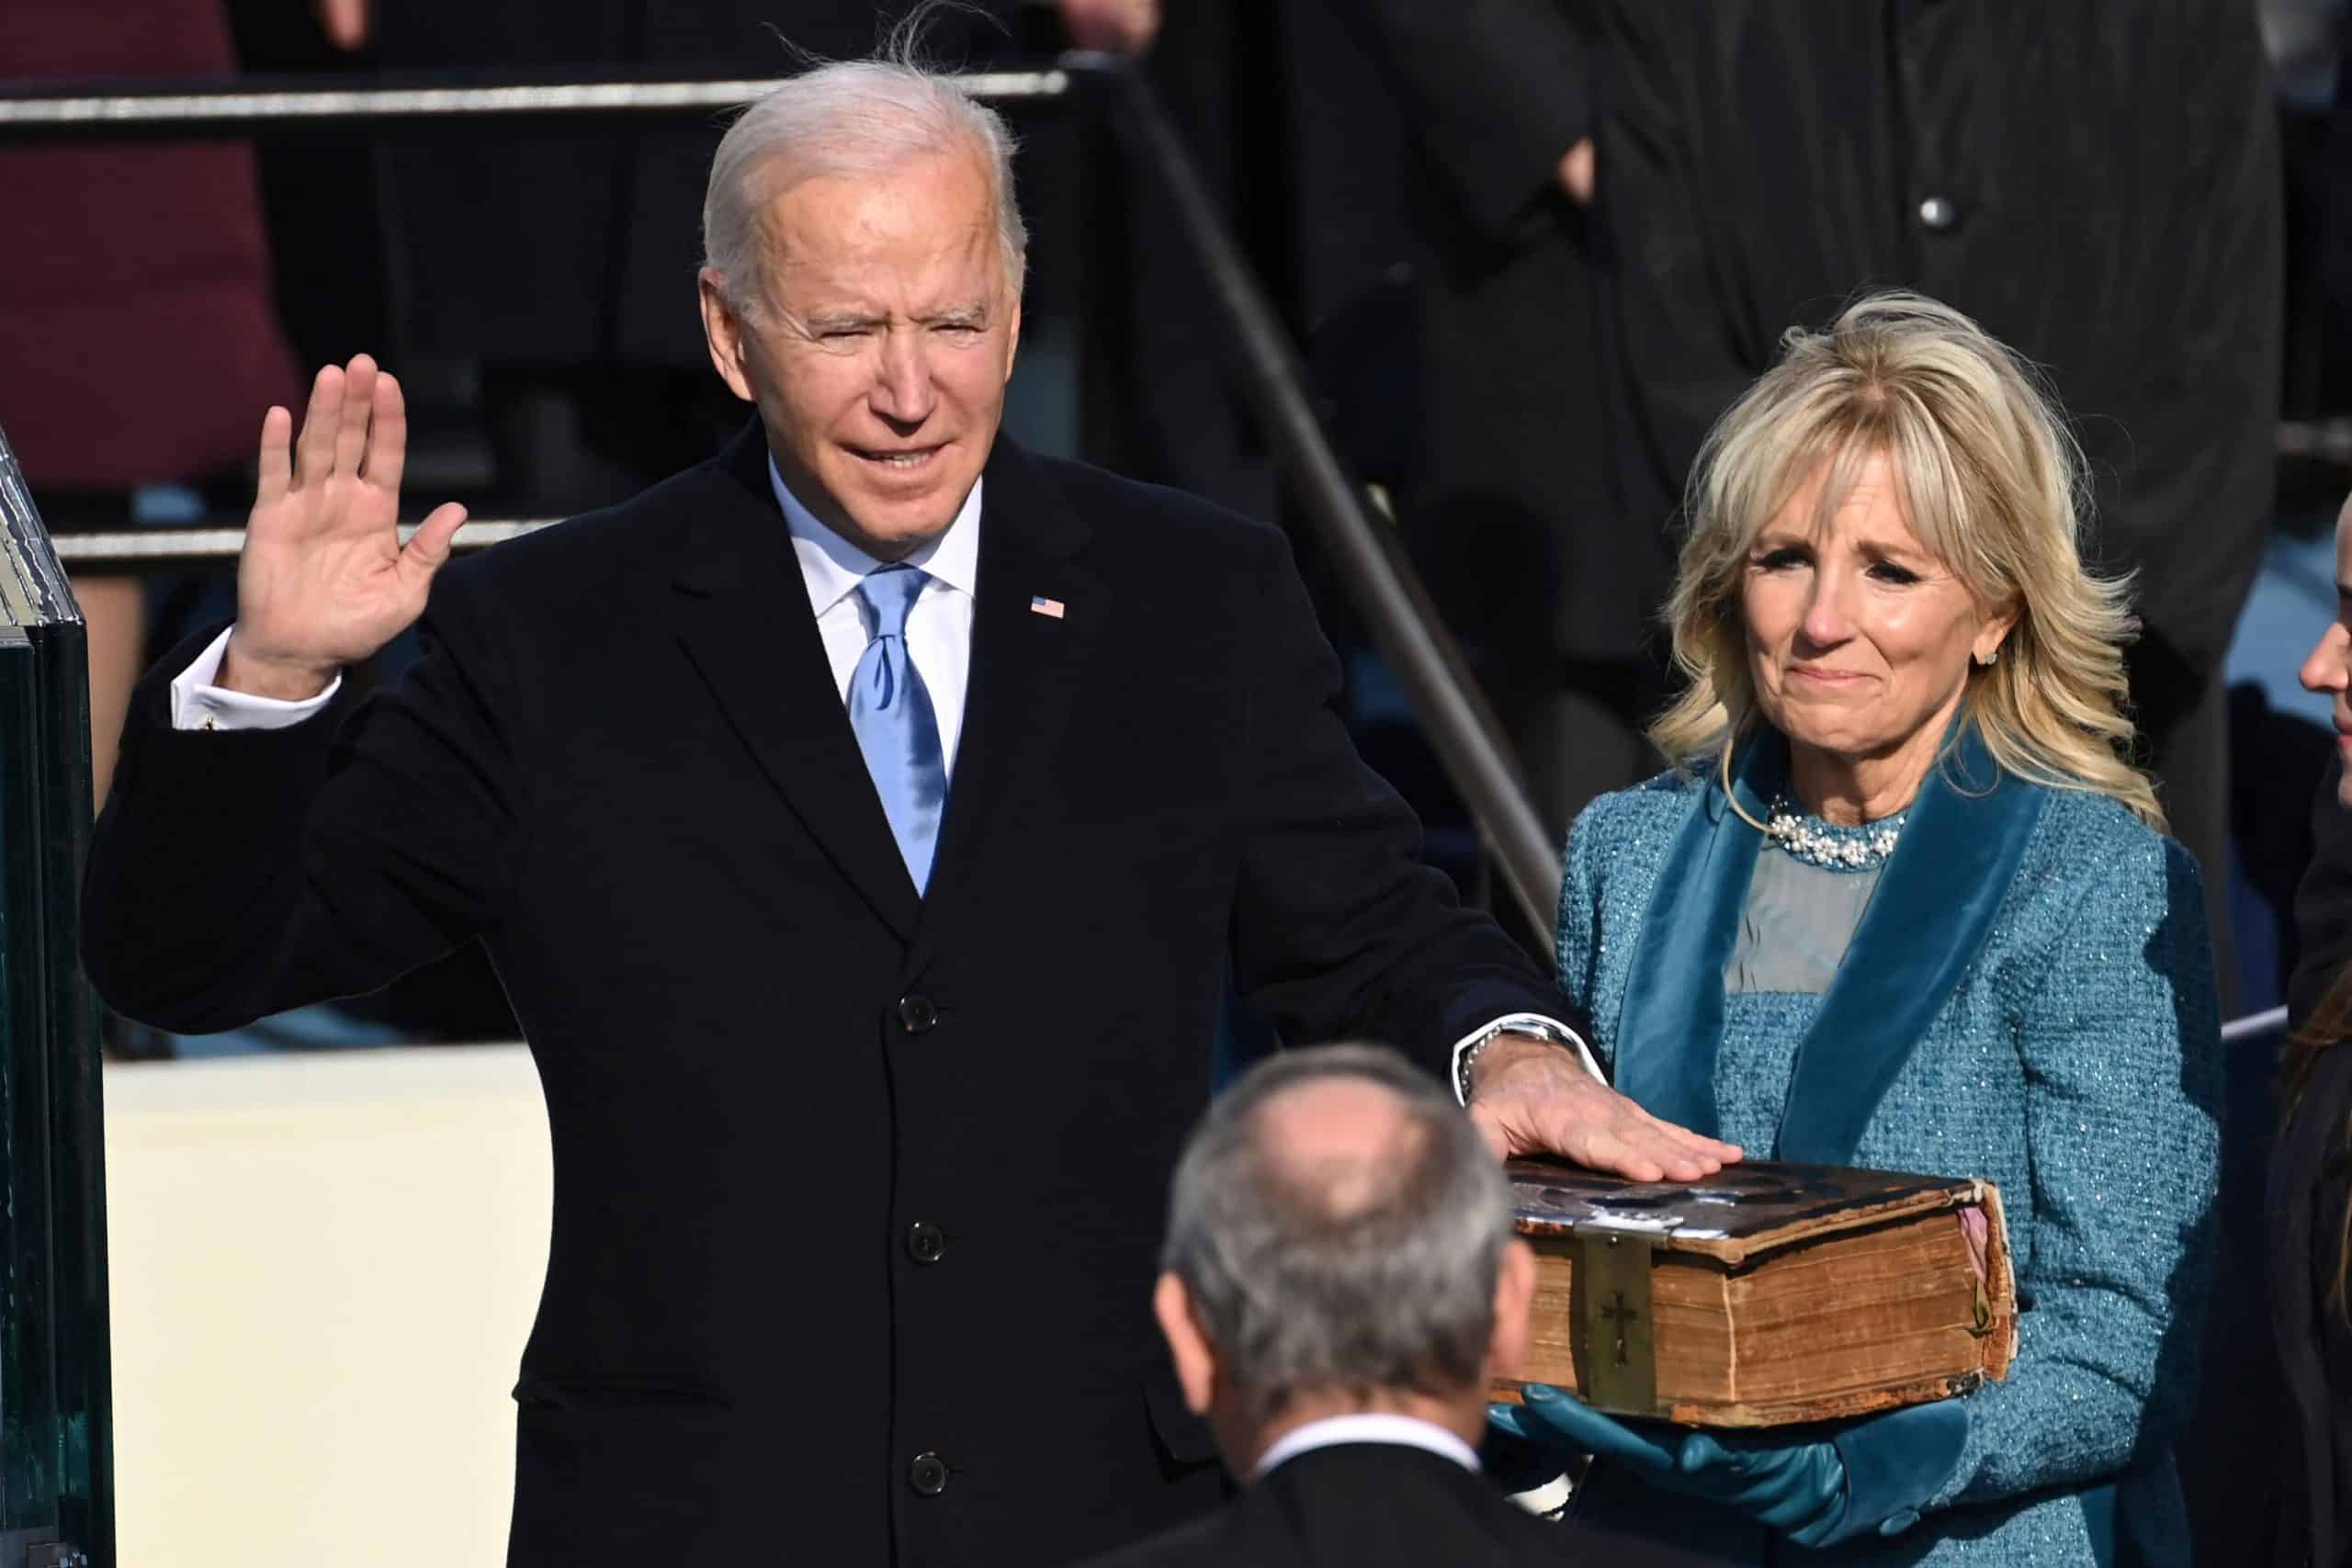 ‘Democracy prevailed’: Joe Biden sworn in as 46th US president